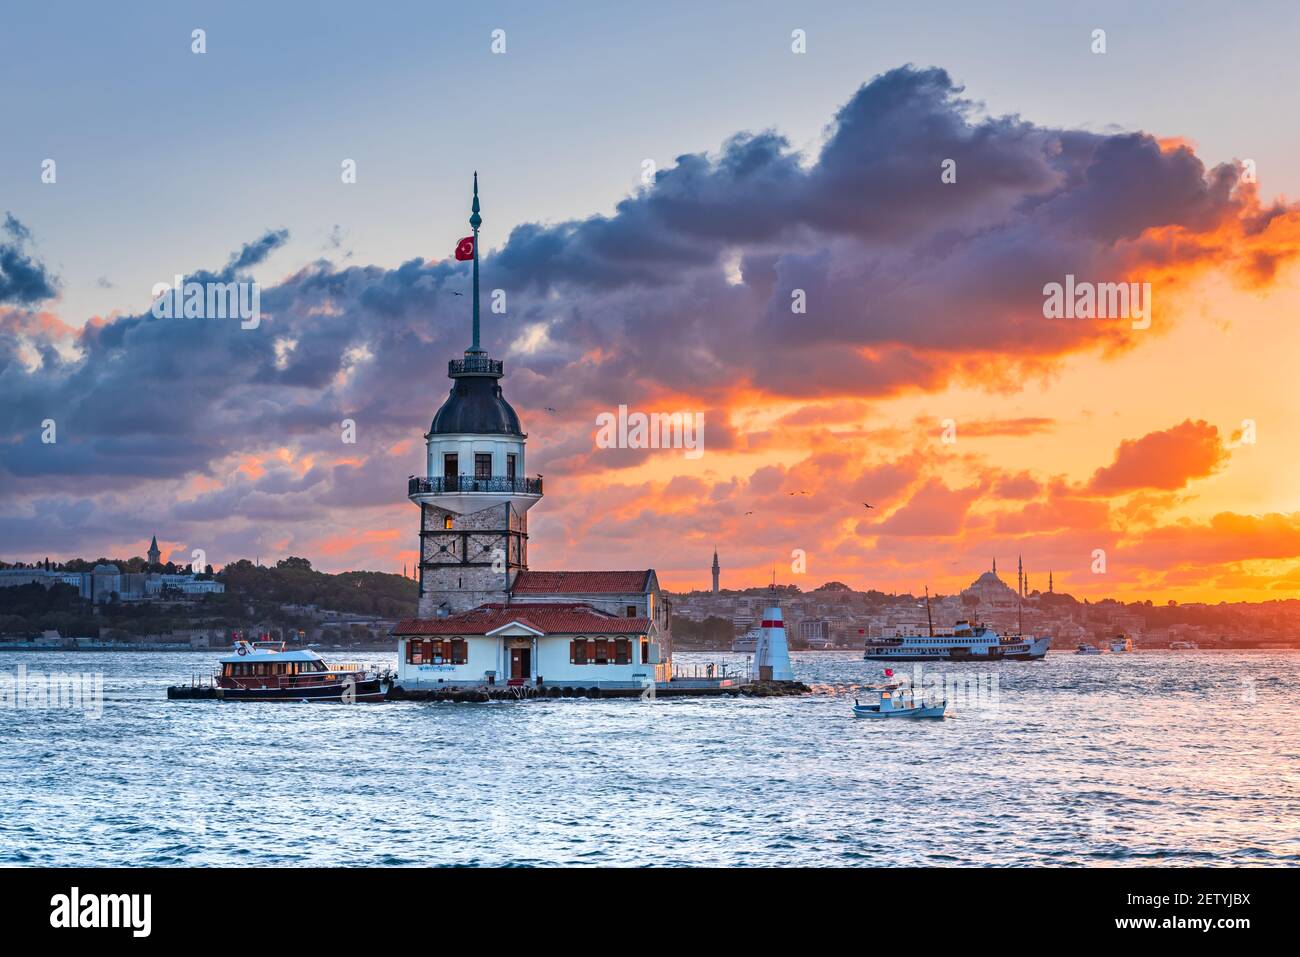 Istanbul, Turkey. Sunset over Bosphorus with famous Maiden's Tower (Kiz Kulesi) symbol of Istanbul, Turkey. Scenic travel background. Stock Photo